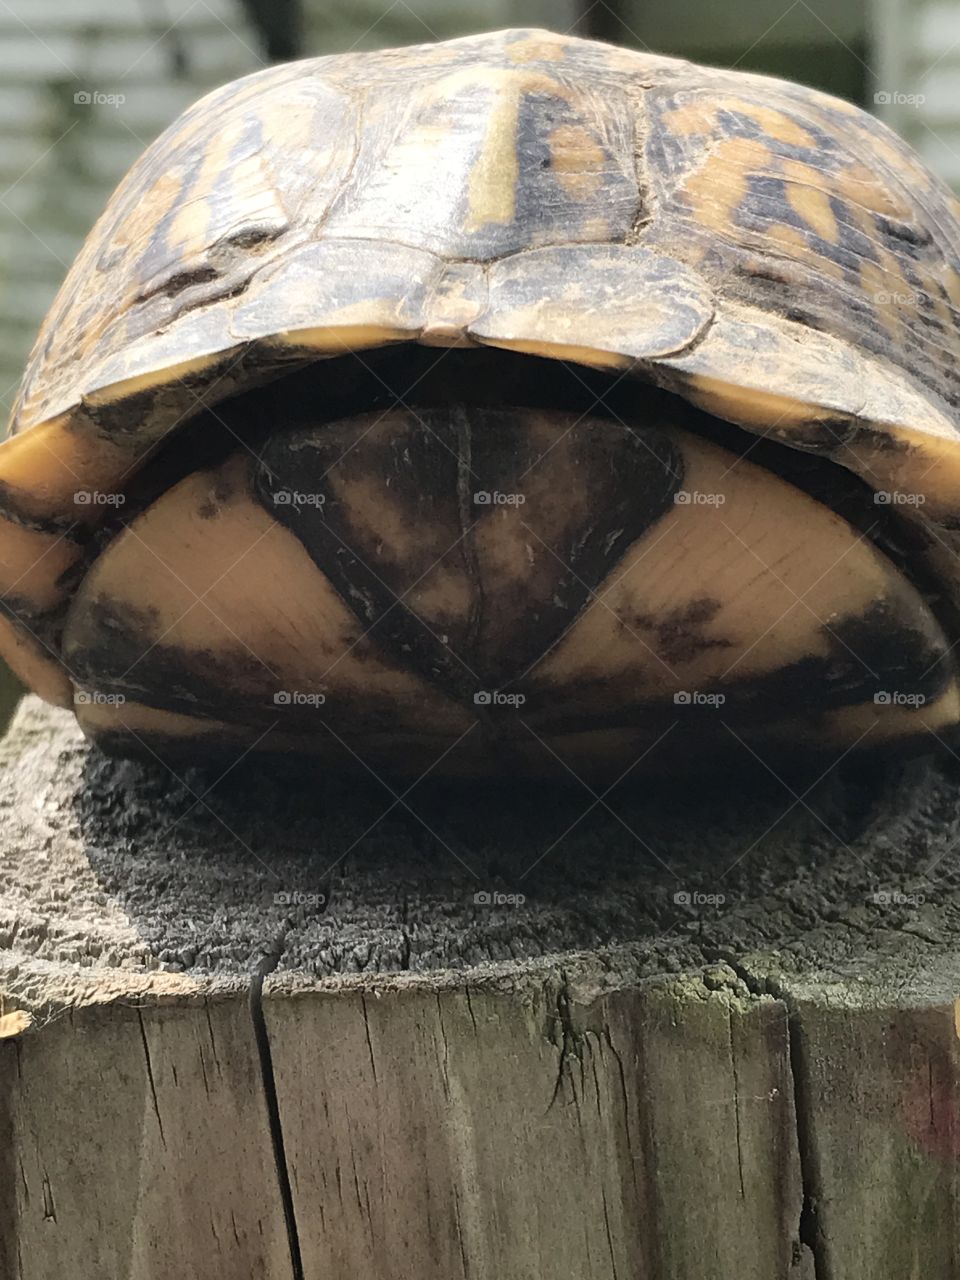 Hiding turtle
